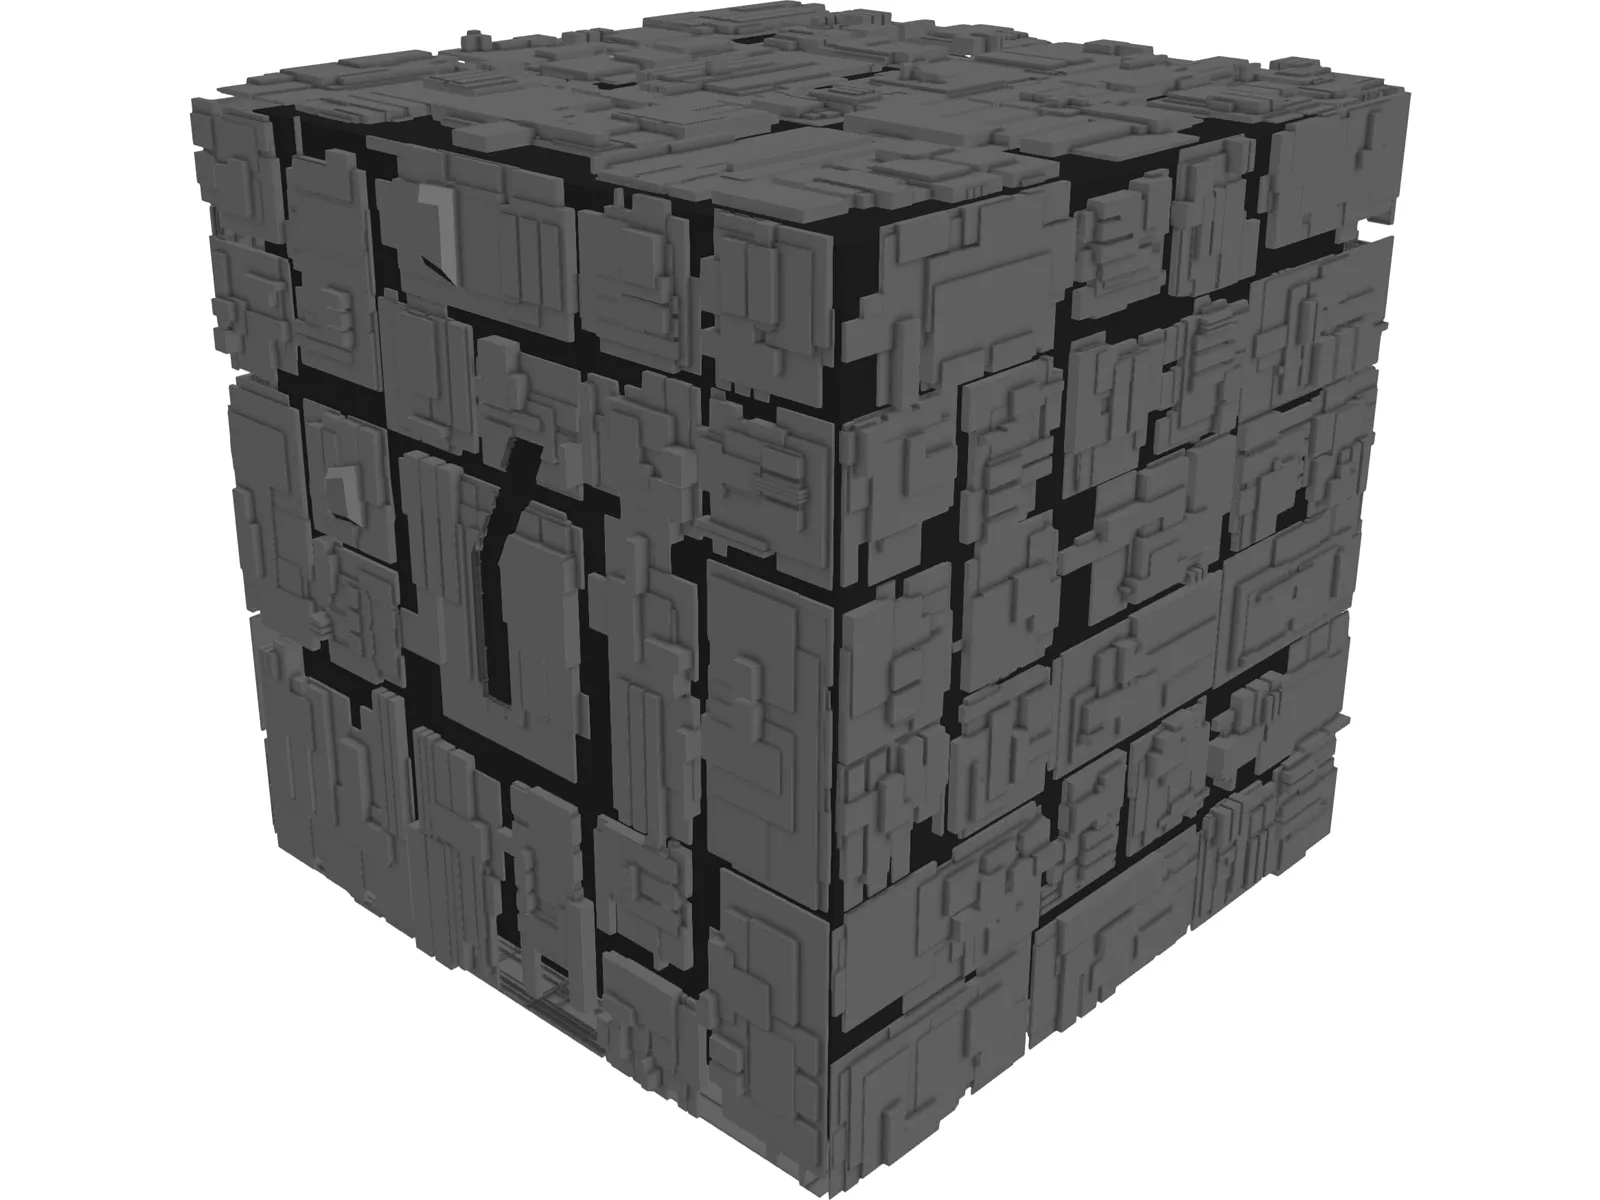 Borg Cube 3D Model